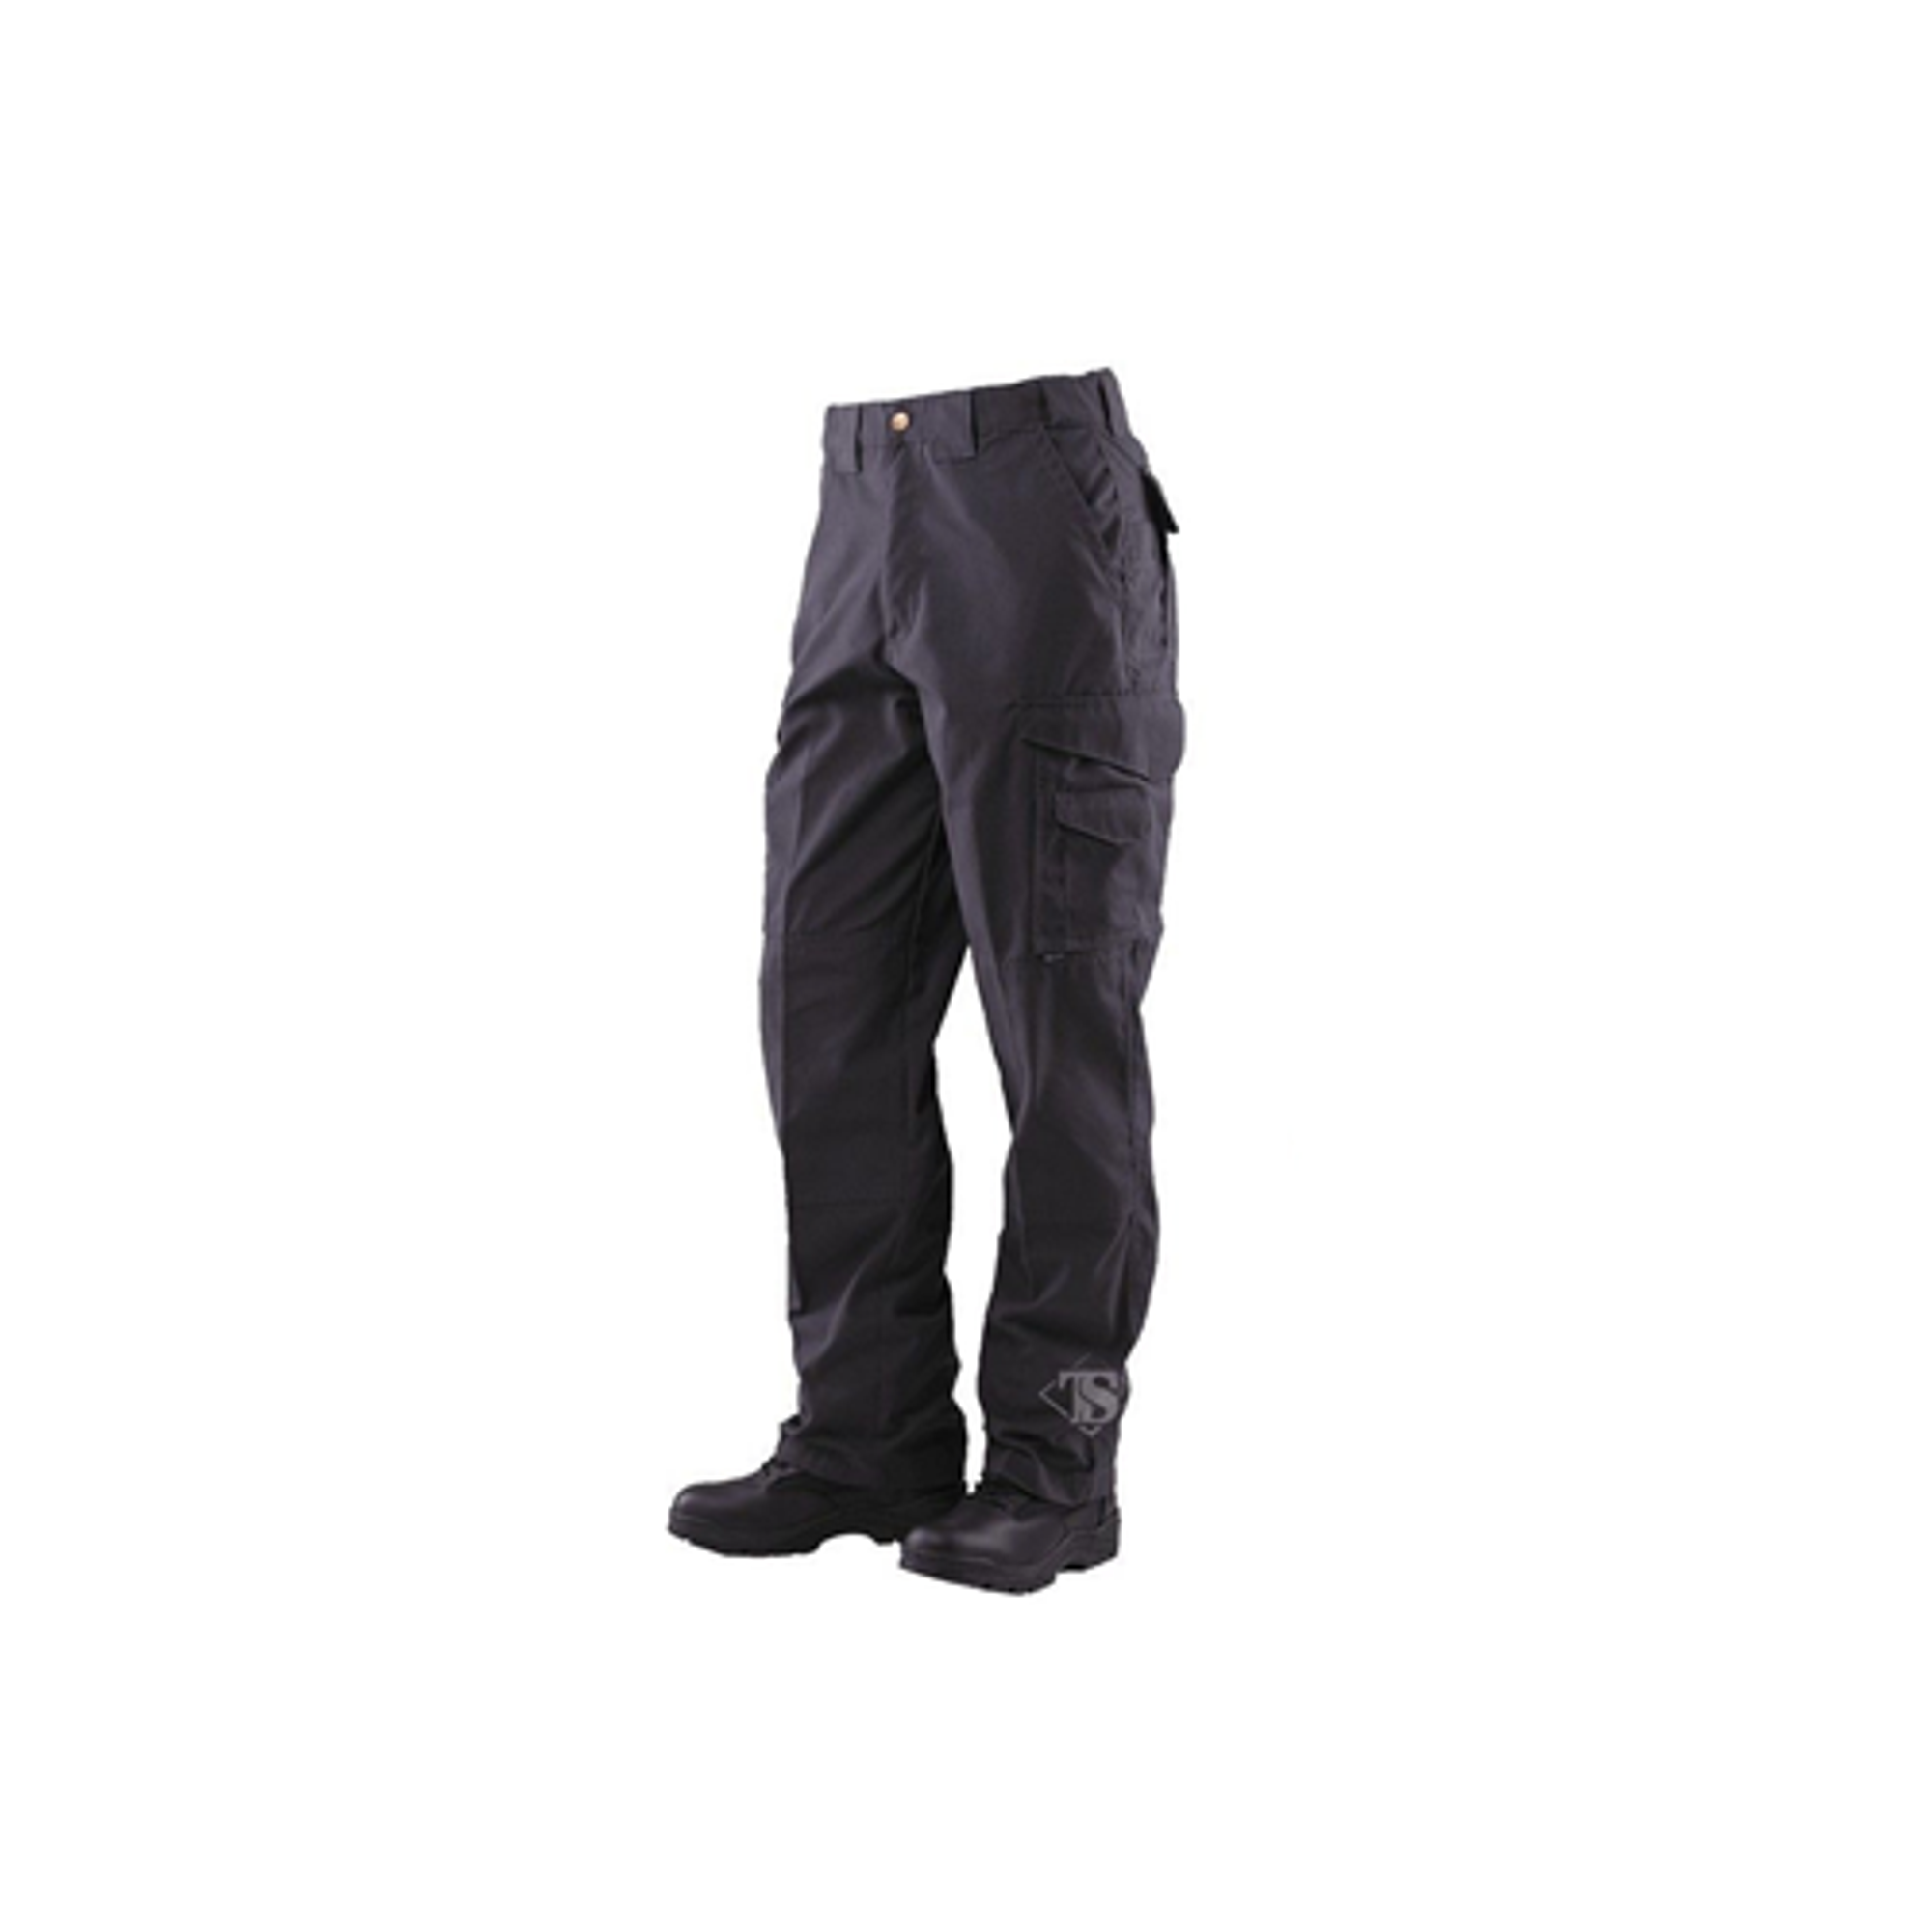 24-7 Original Tactical Pants - 6.5oz - Black - KRTSP-1062047